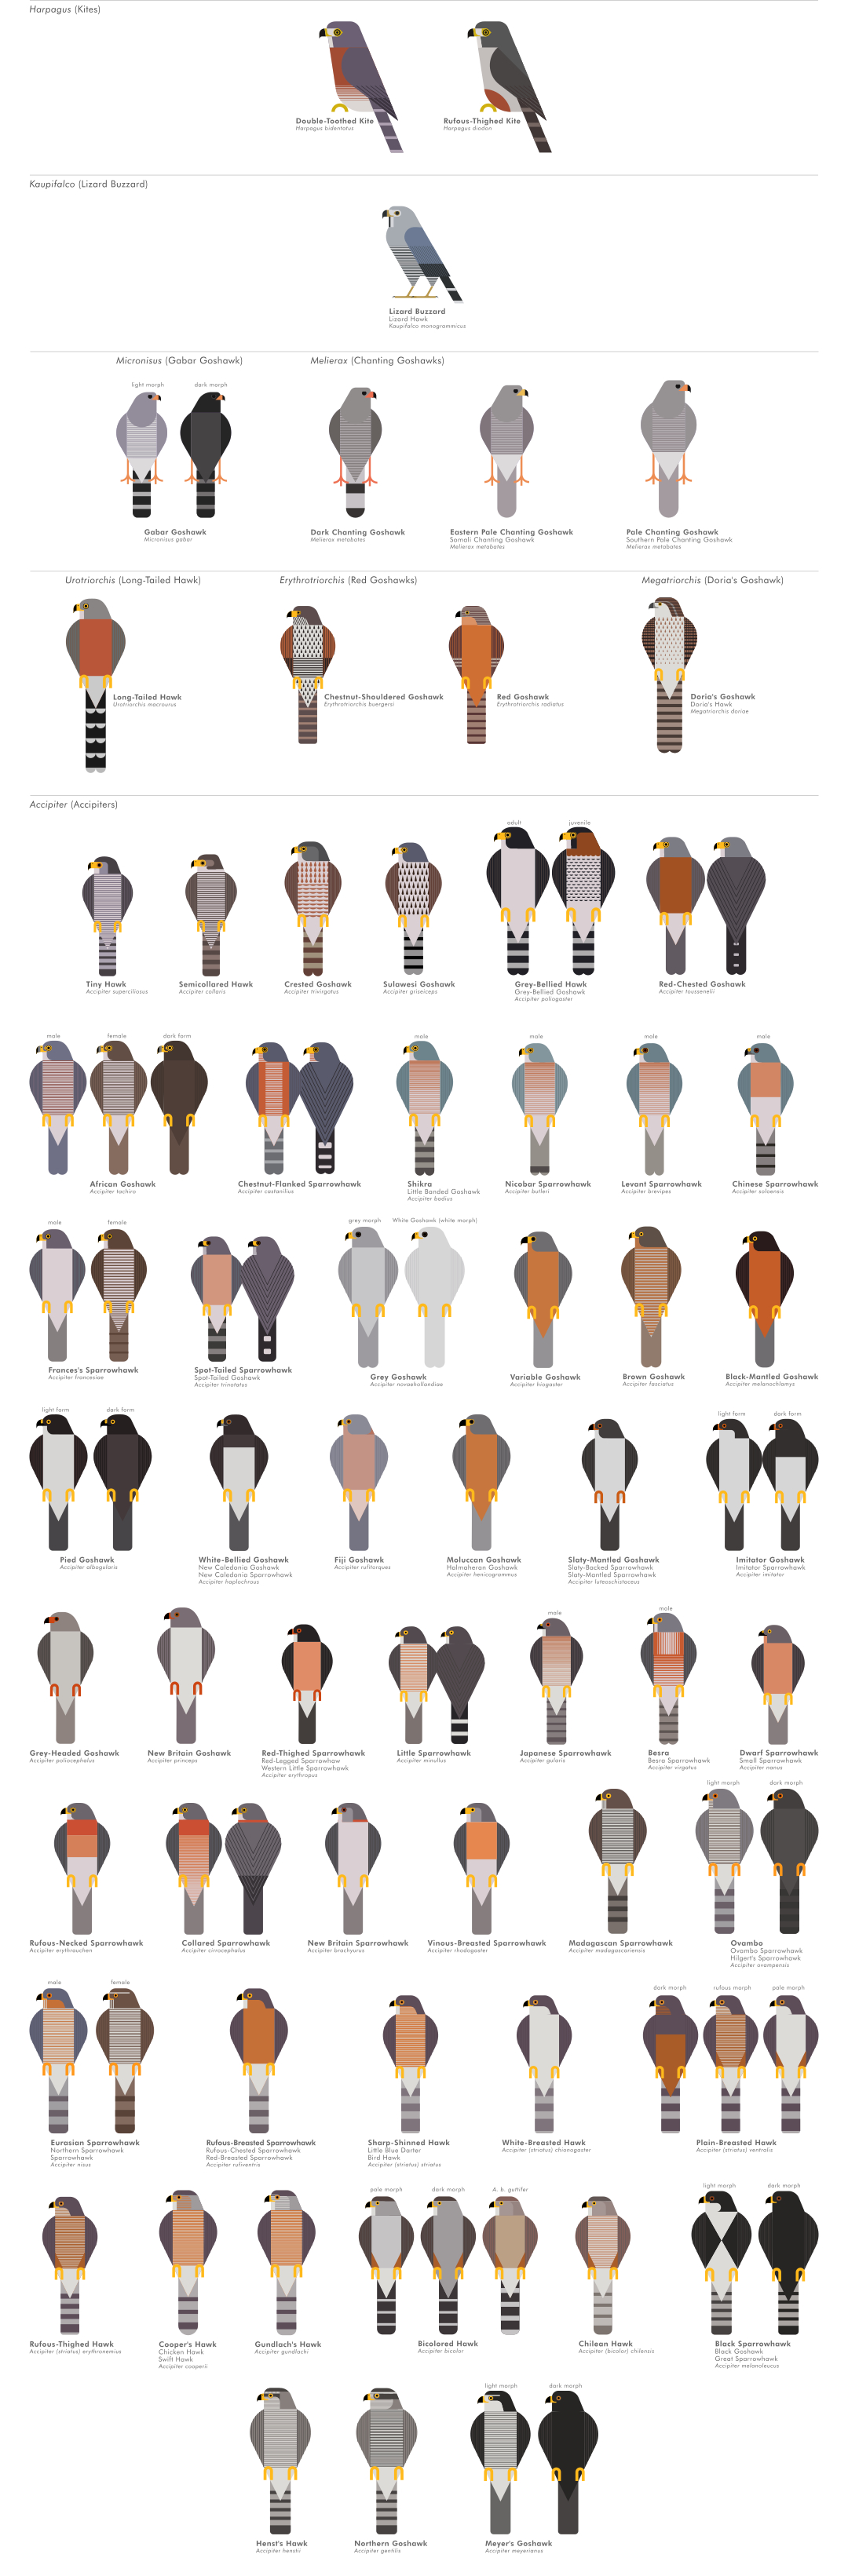 scott partridge - ave - avian vector encyclopedia - accipitriformes accipiters - bird vector art